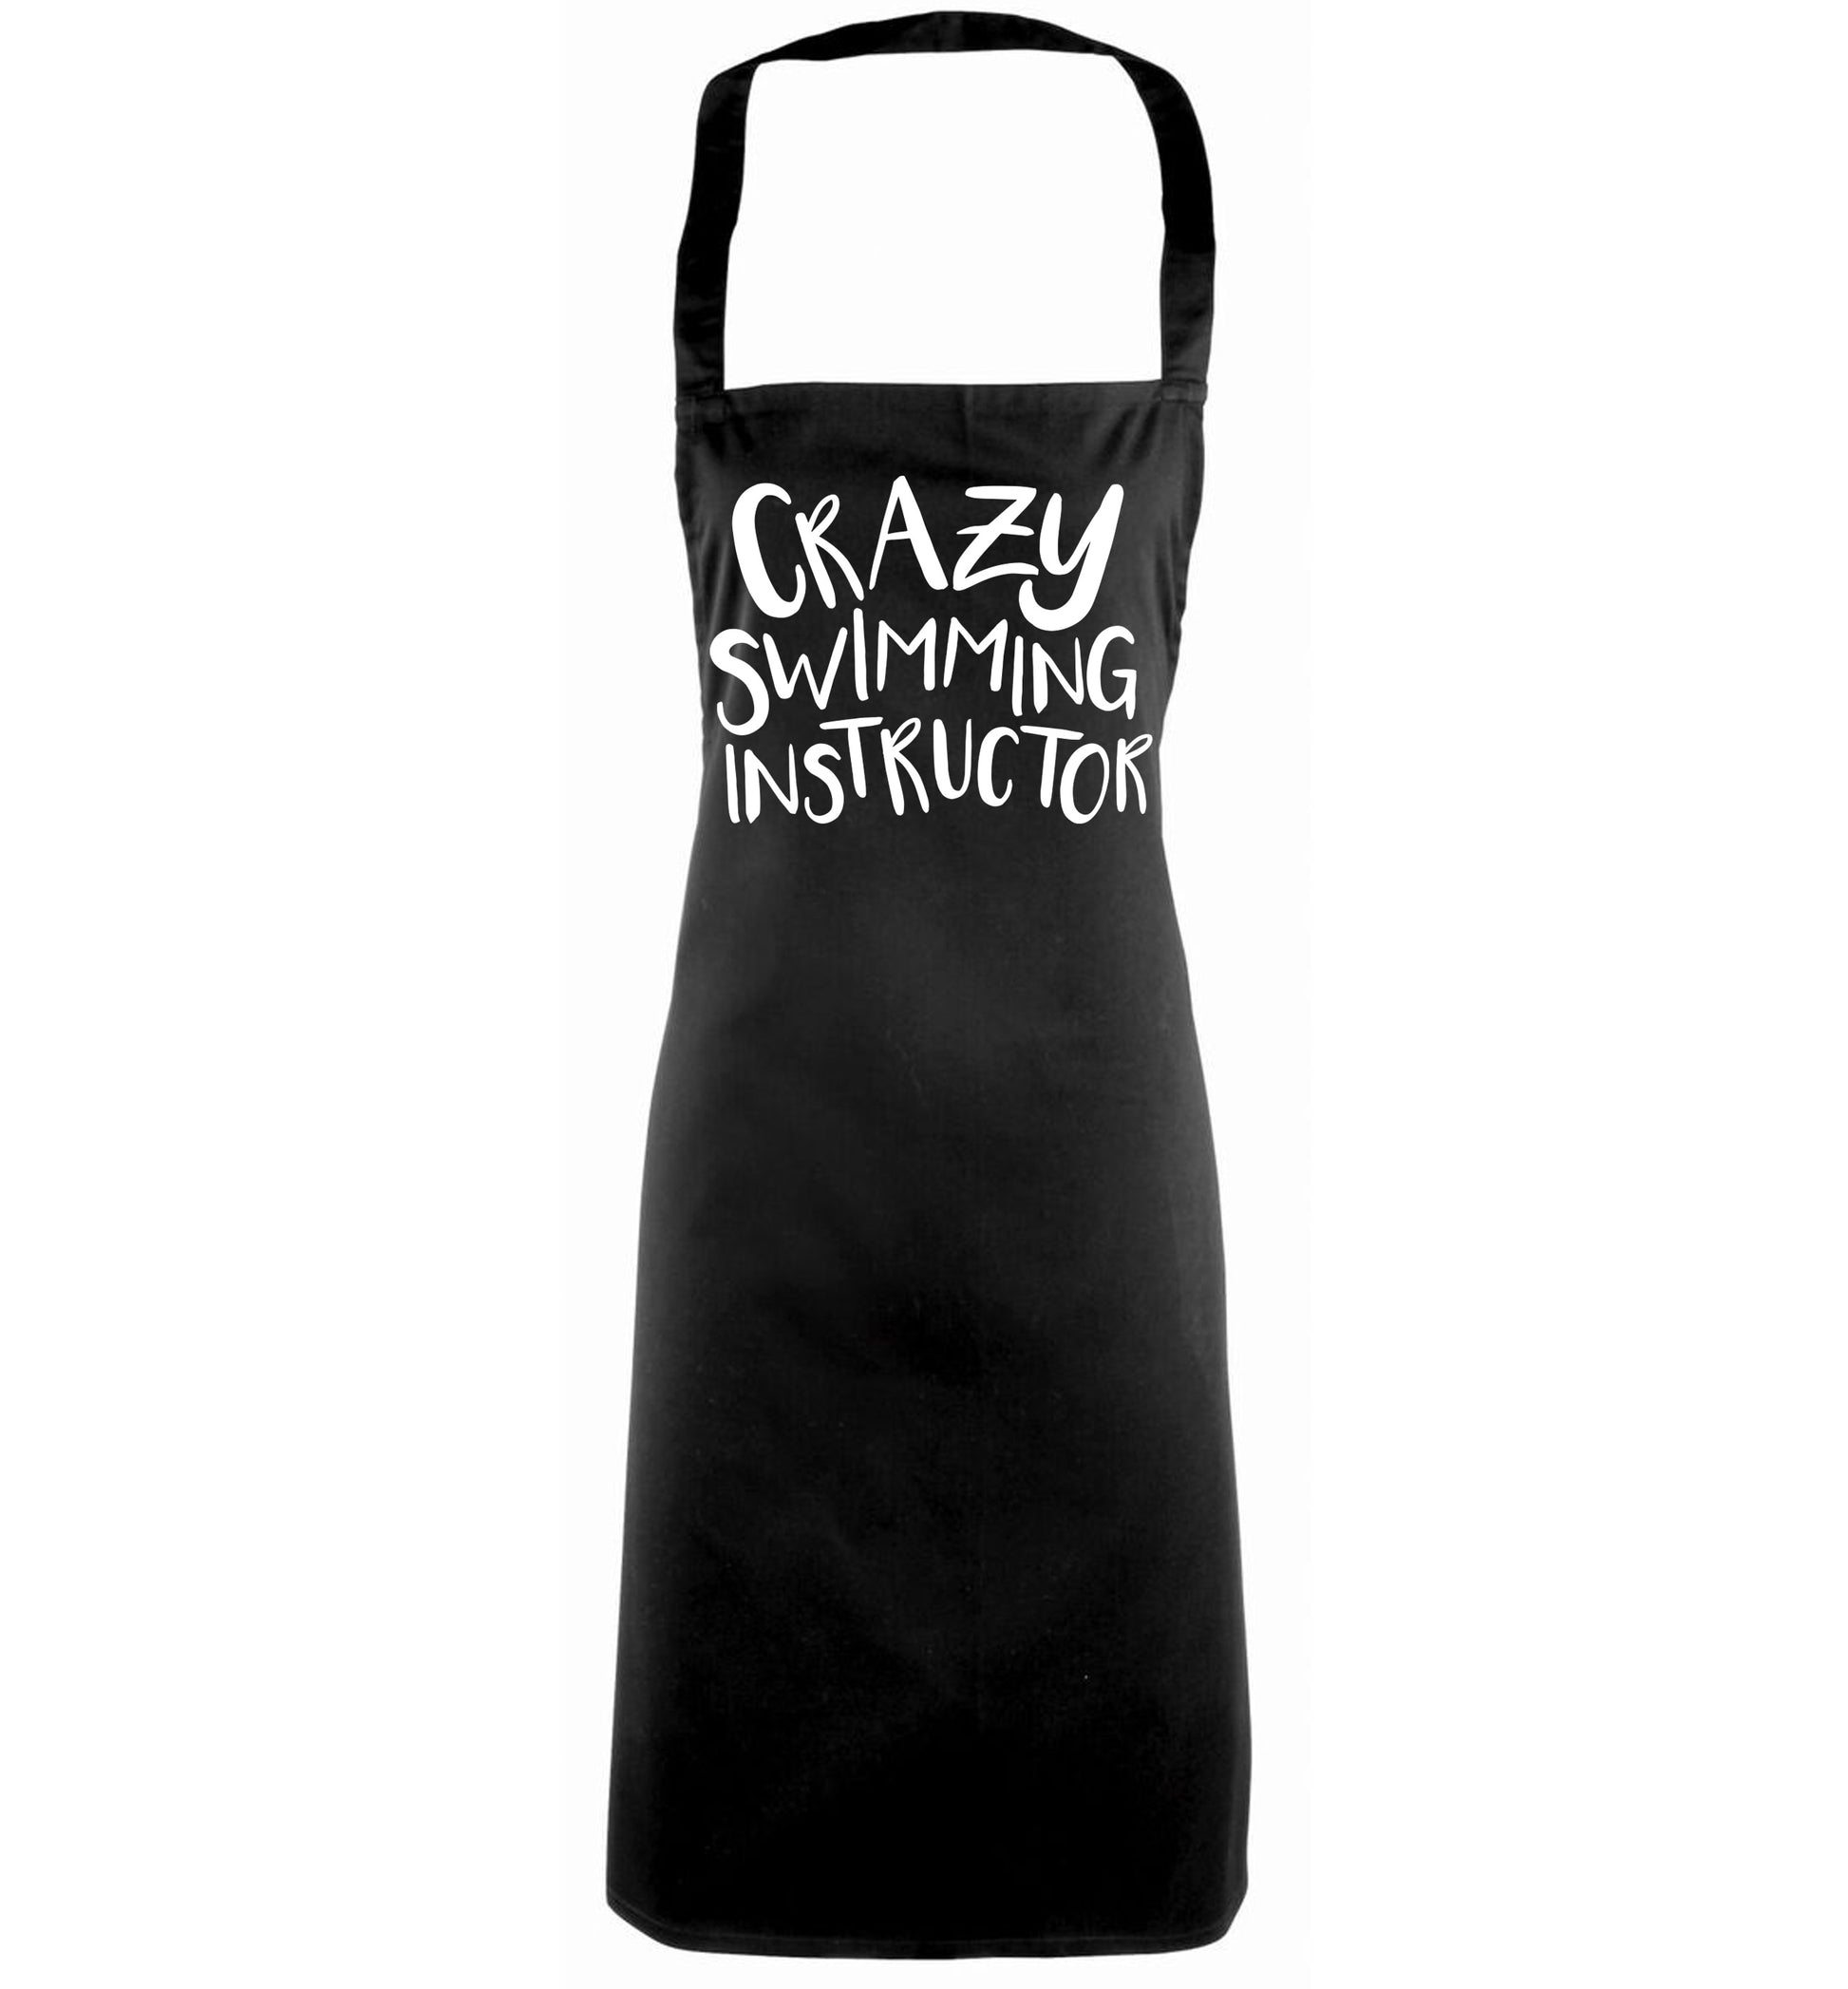 Crazy swimming instructor black apron